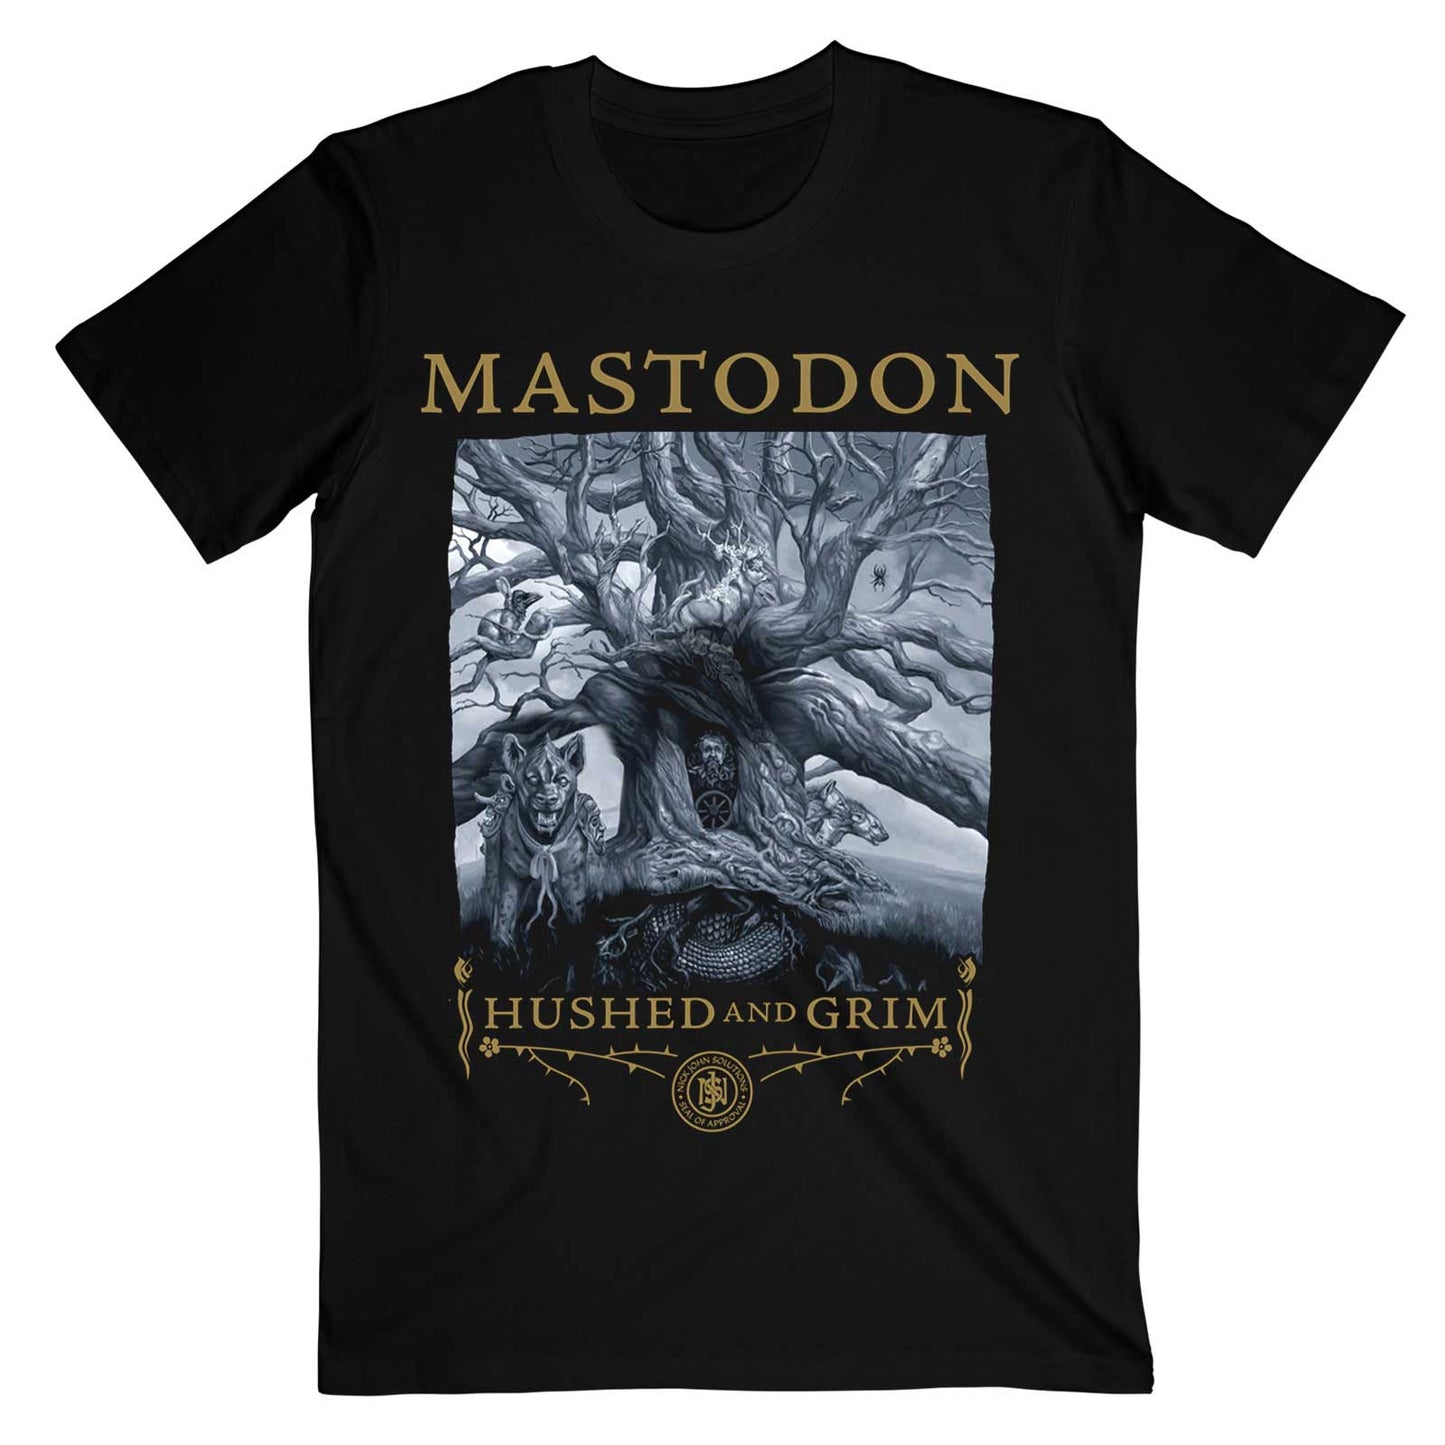 Mastodon T-Shirt - Hushed and Grim Album Cover (Unisex)